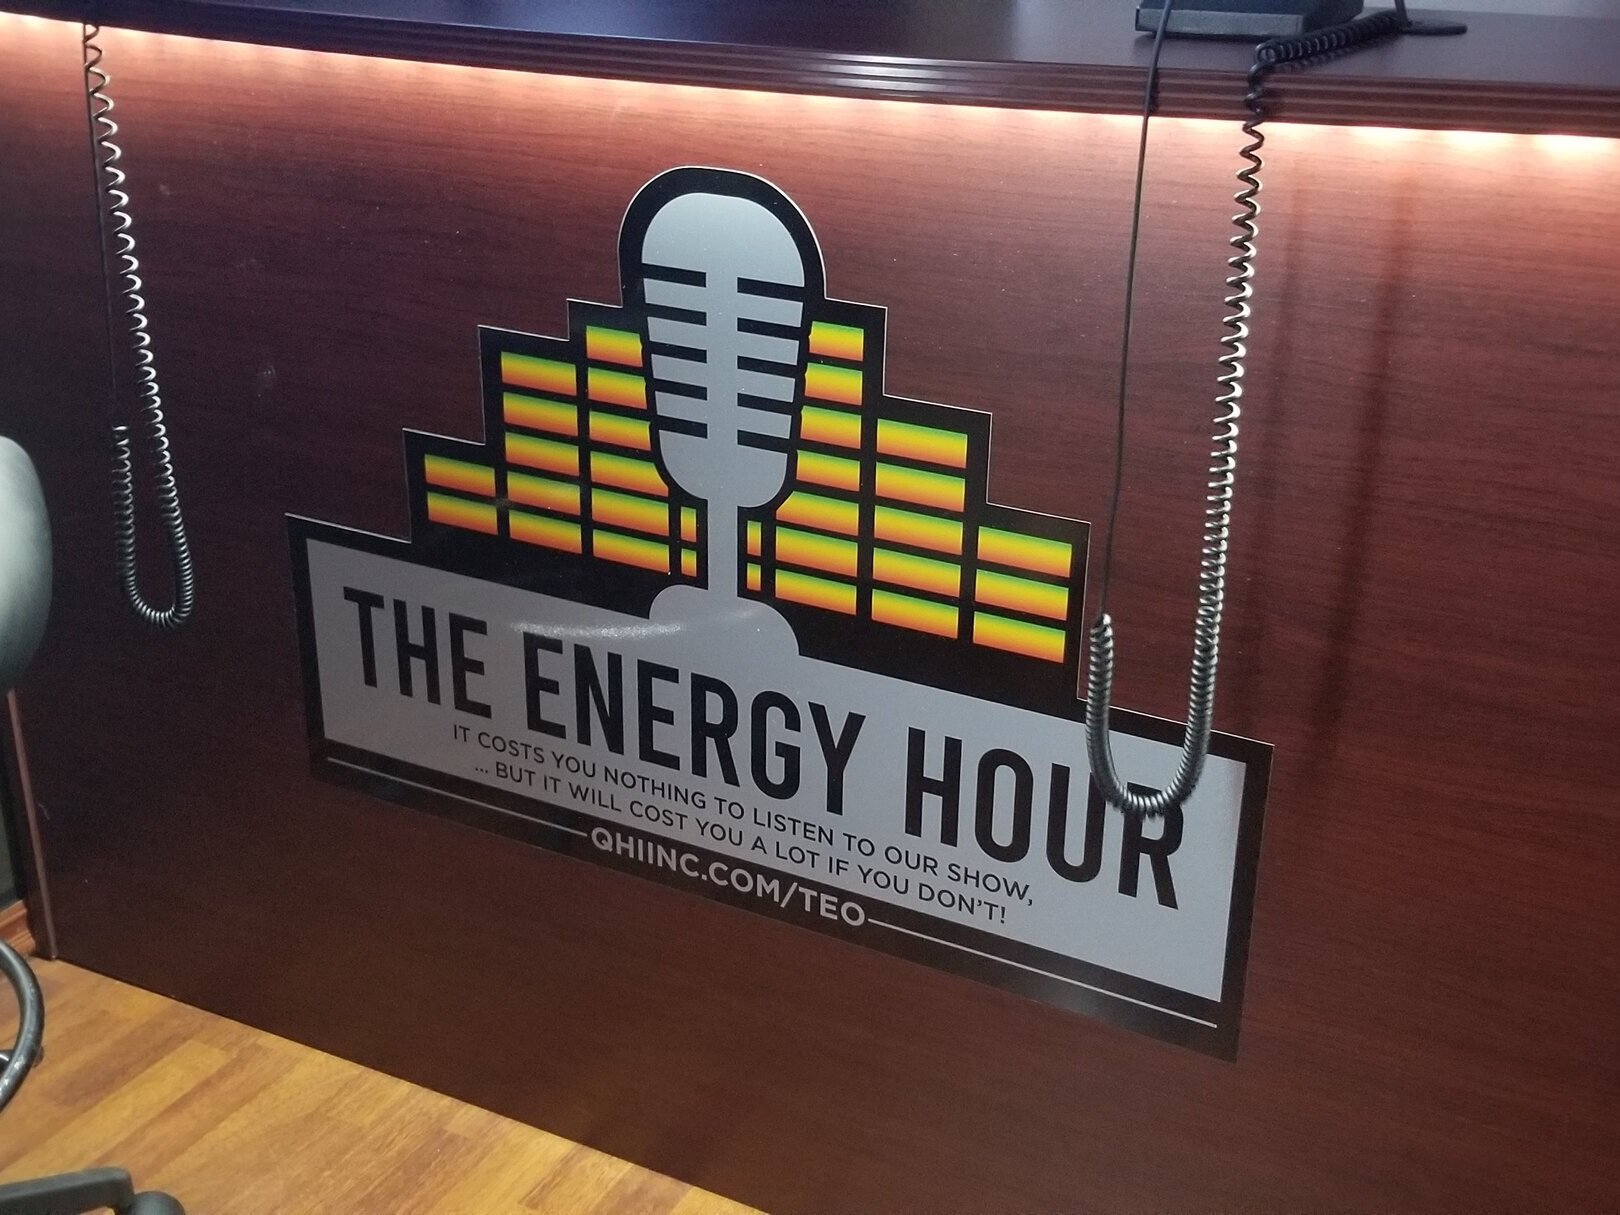 The Energy Hour PodCast logo